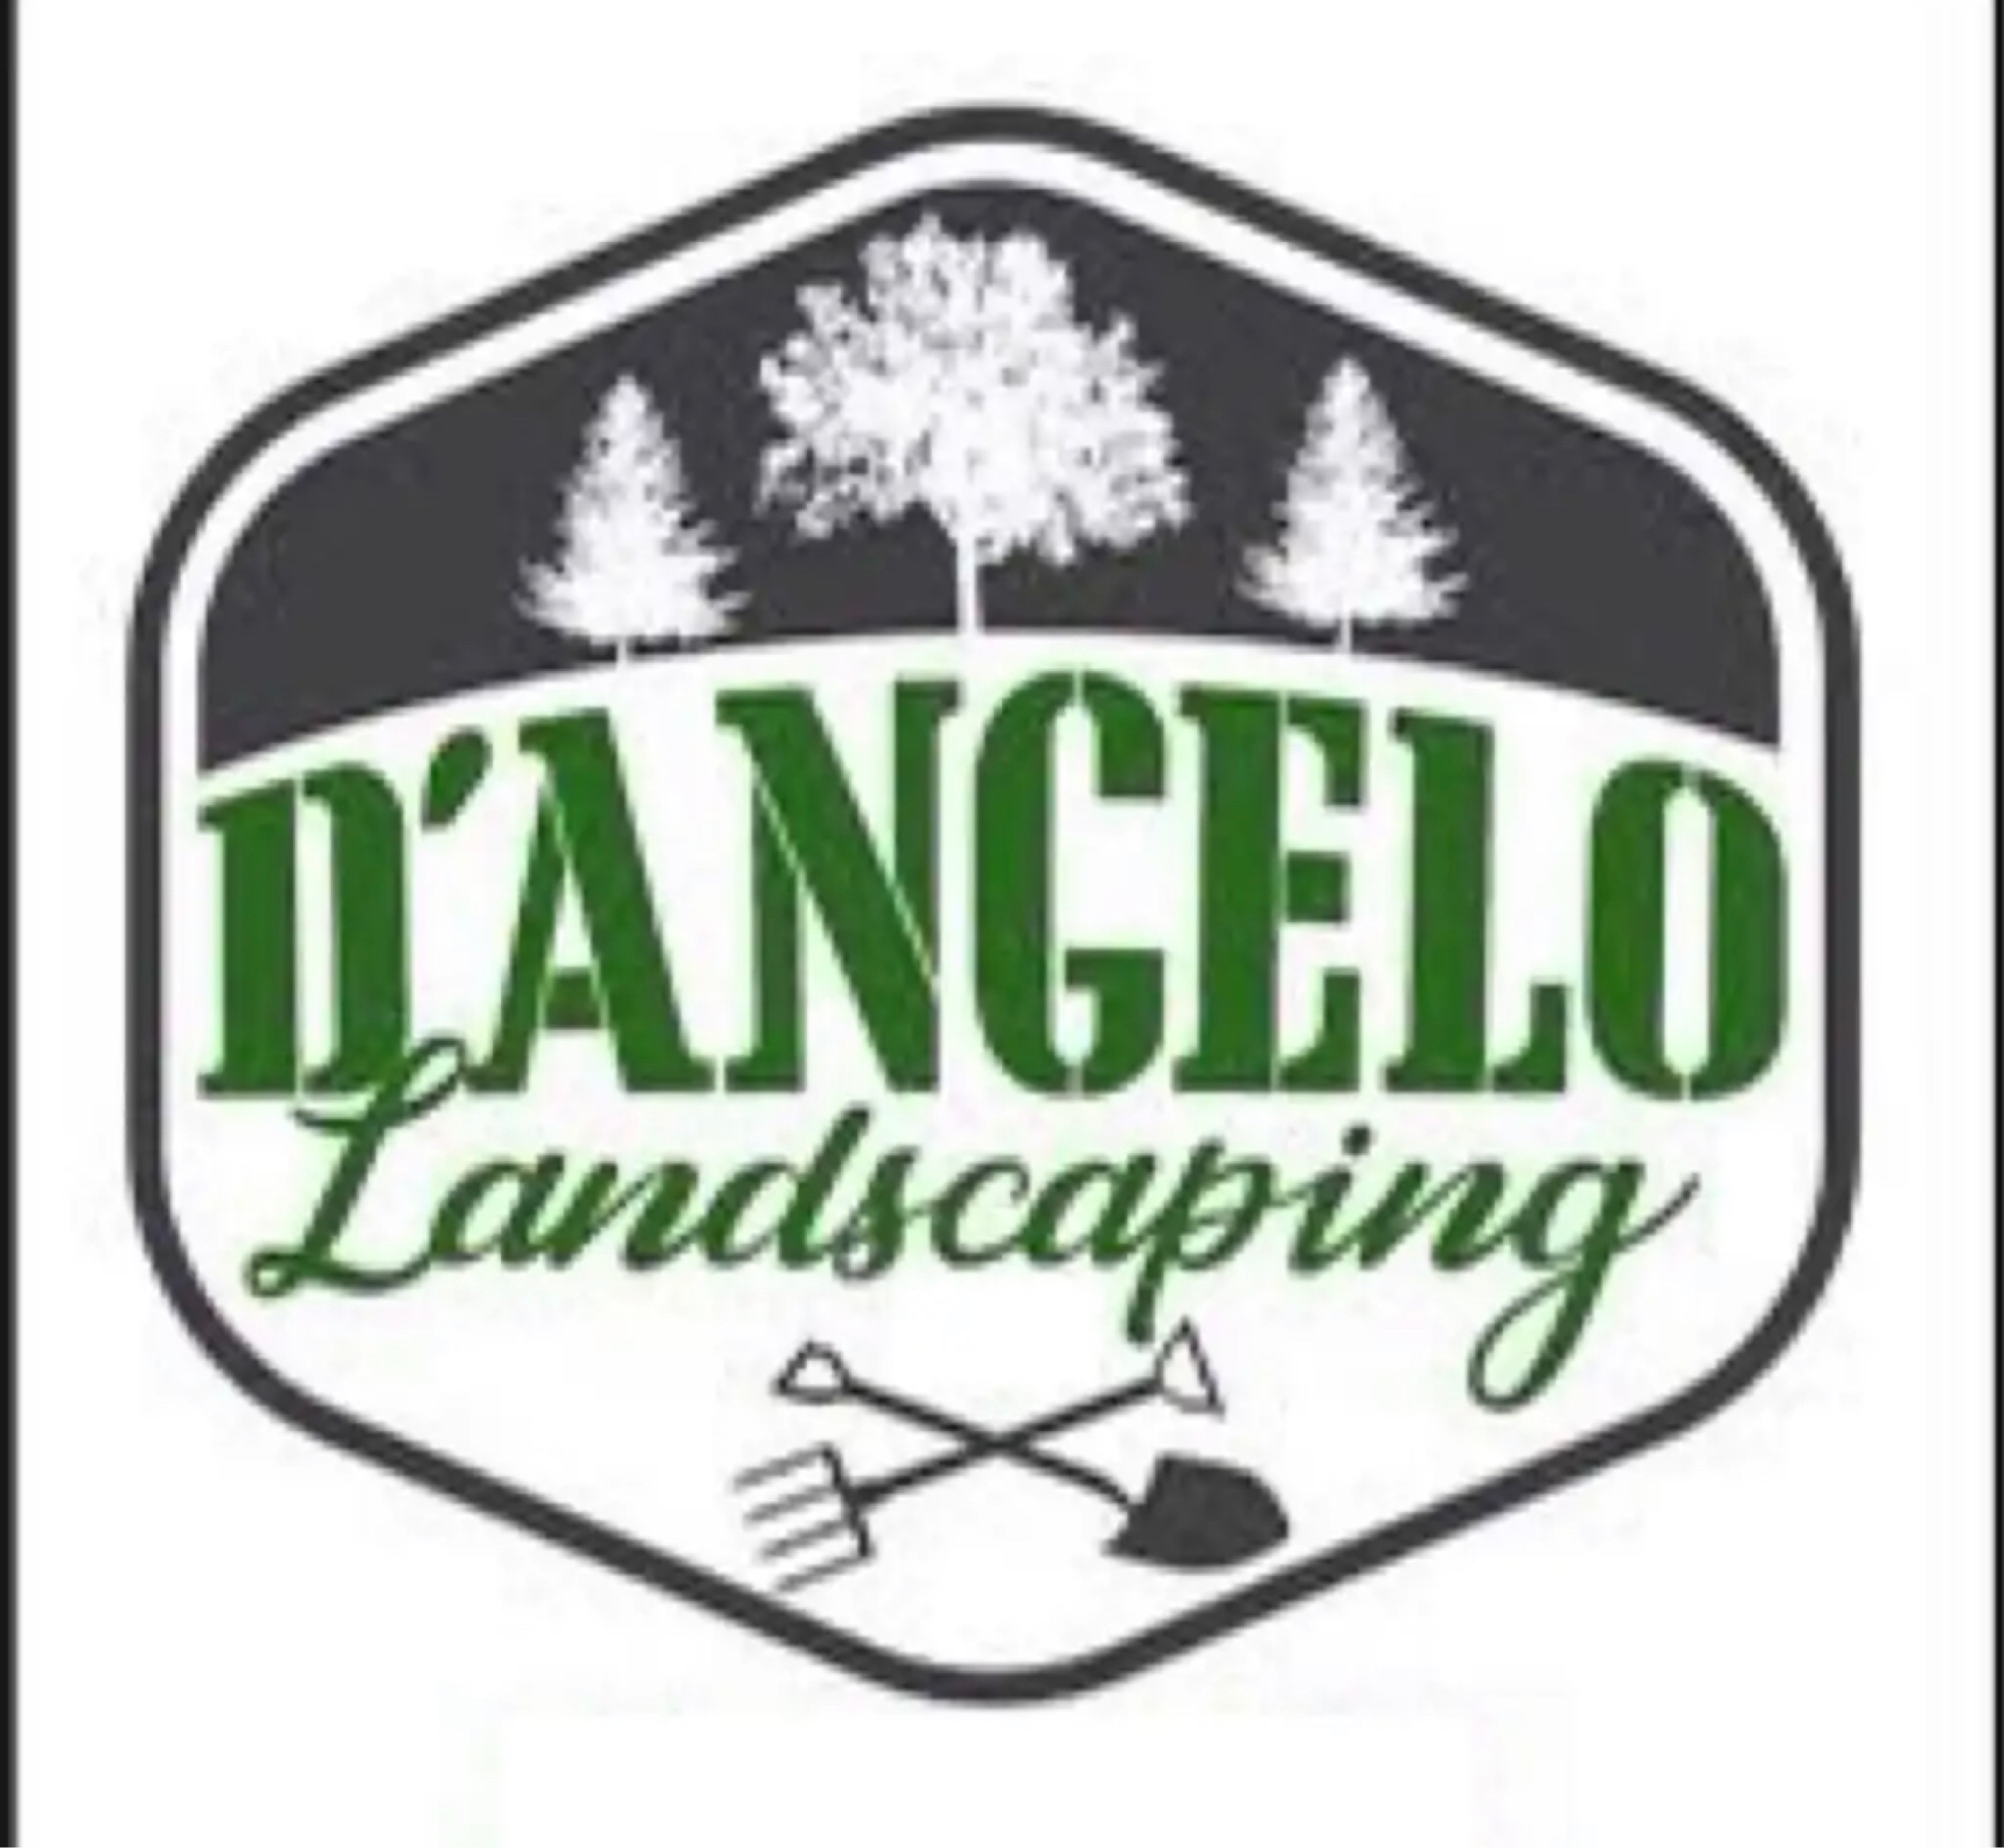 D'angelos Landscaping Logo